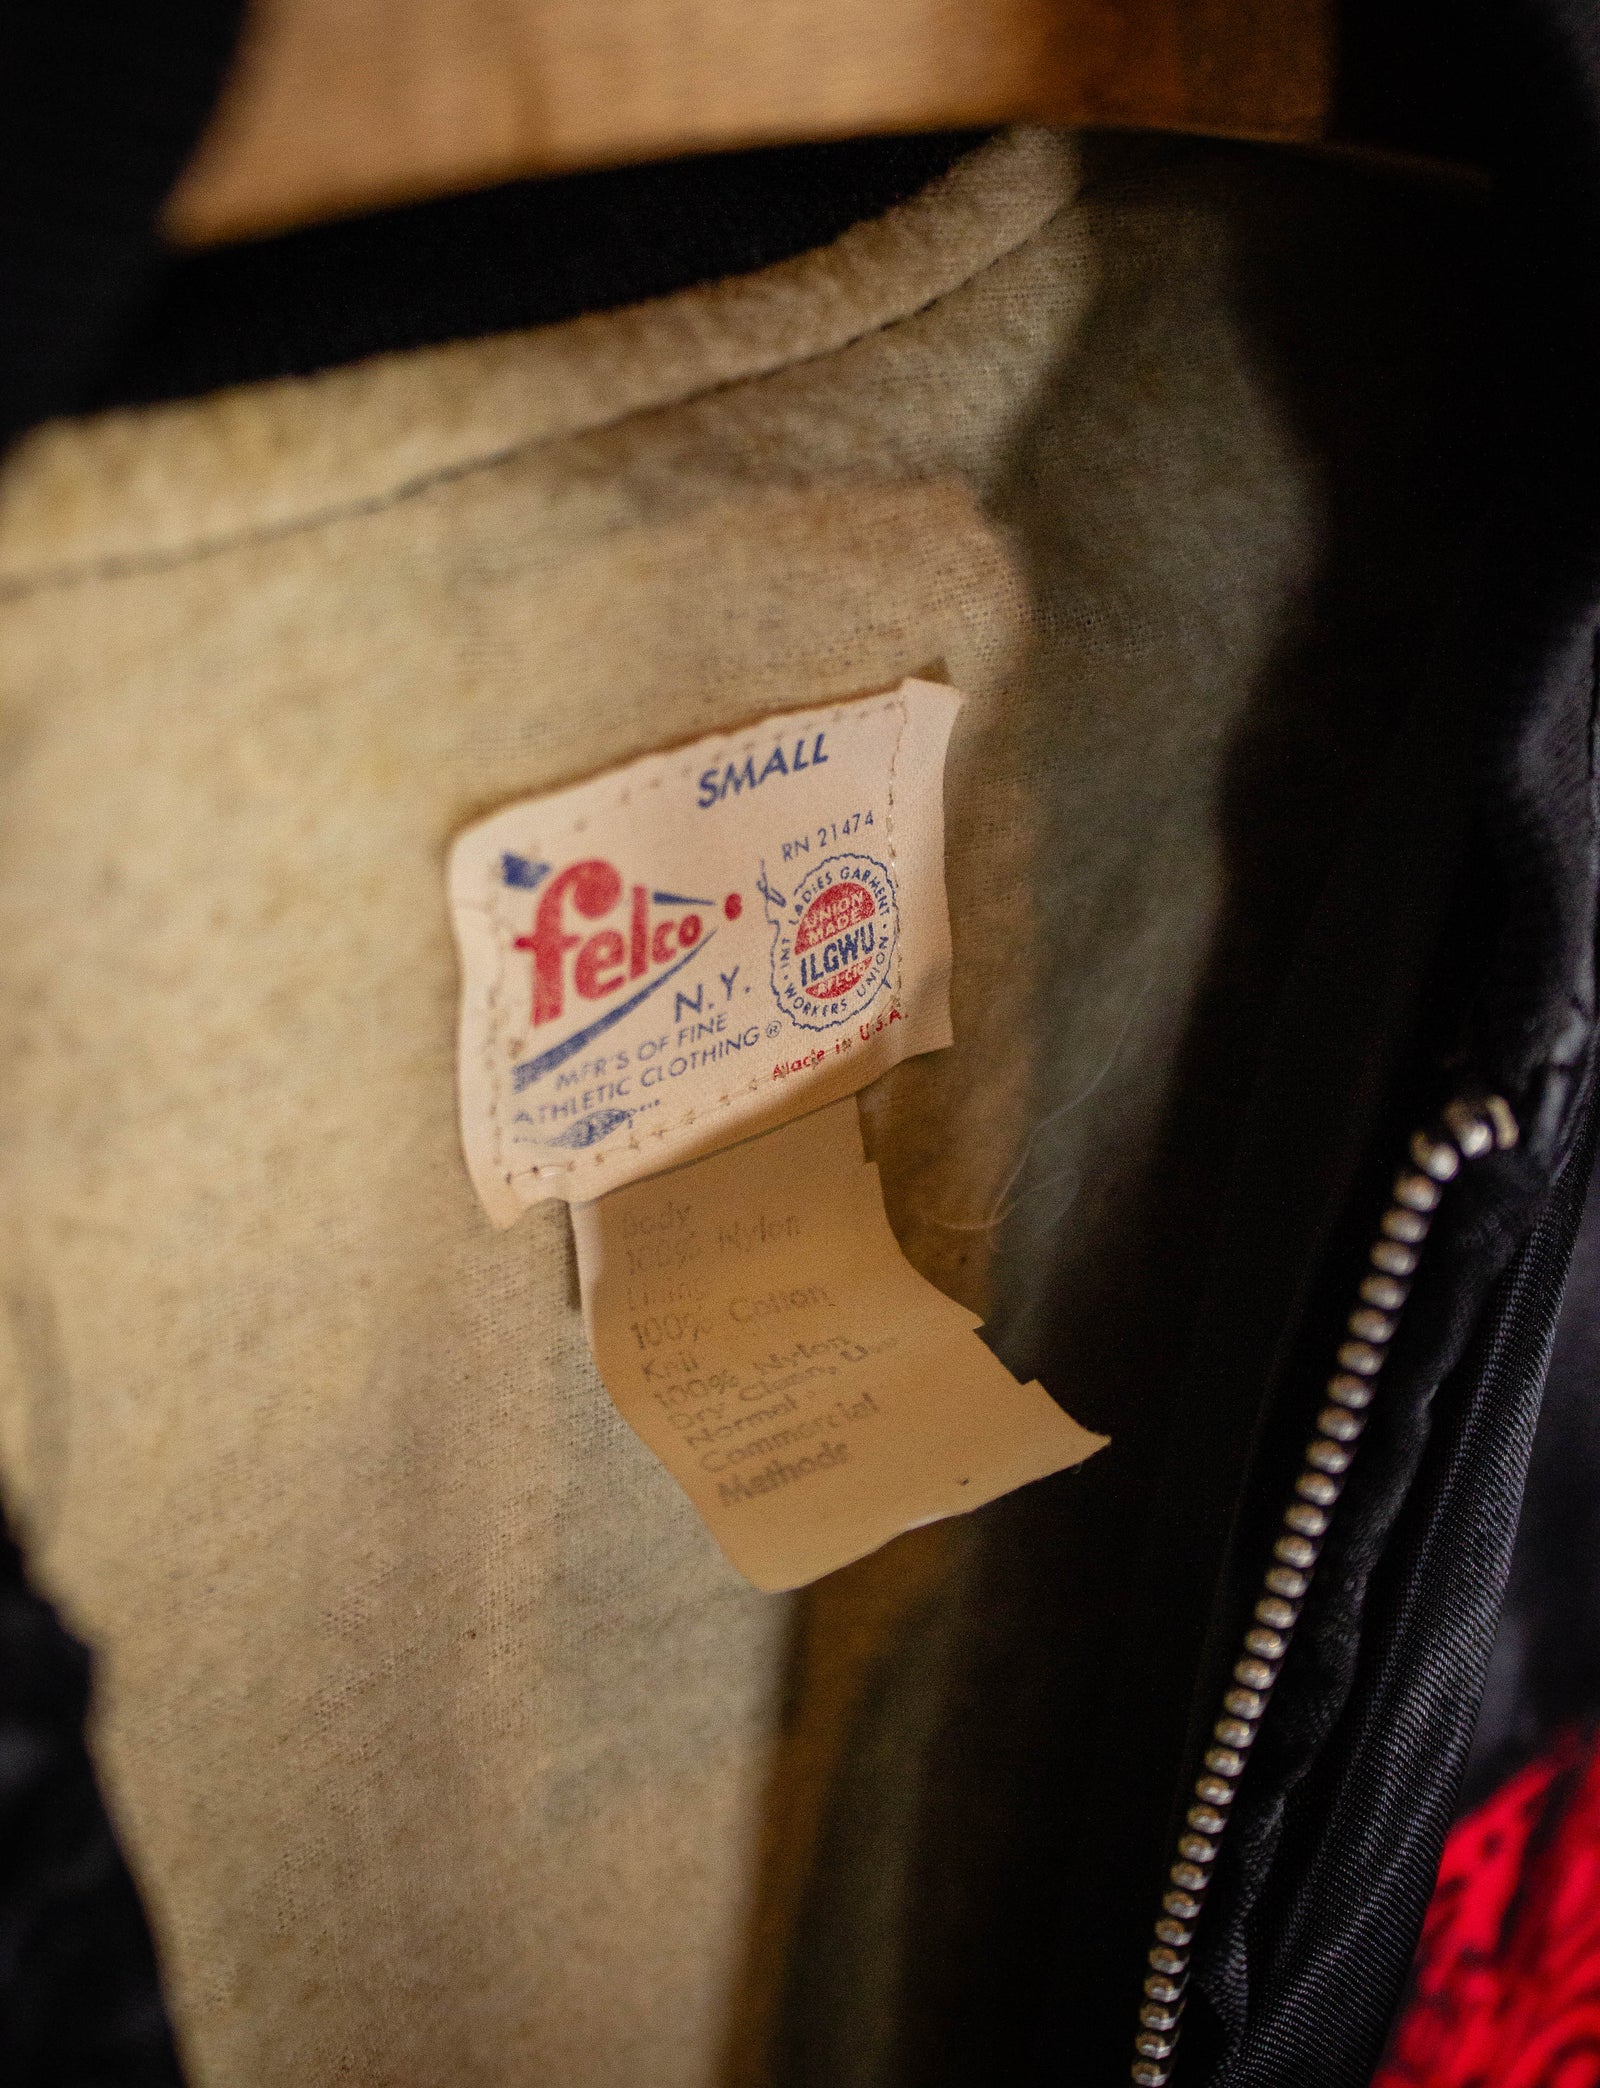 Vintage Tom Jones Satin Tour Jacket 1979 Black Small-Medium